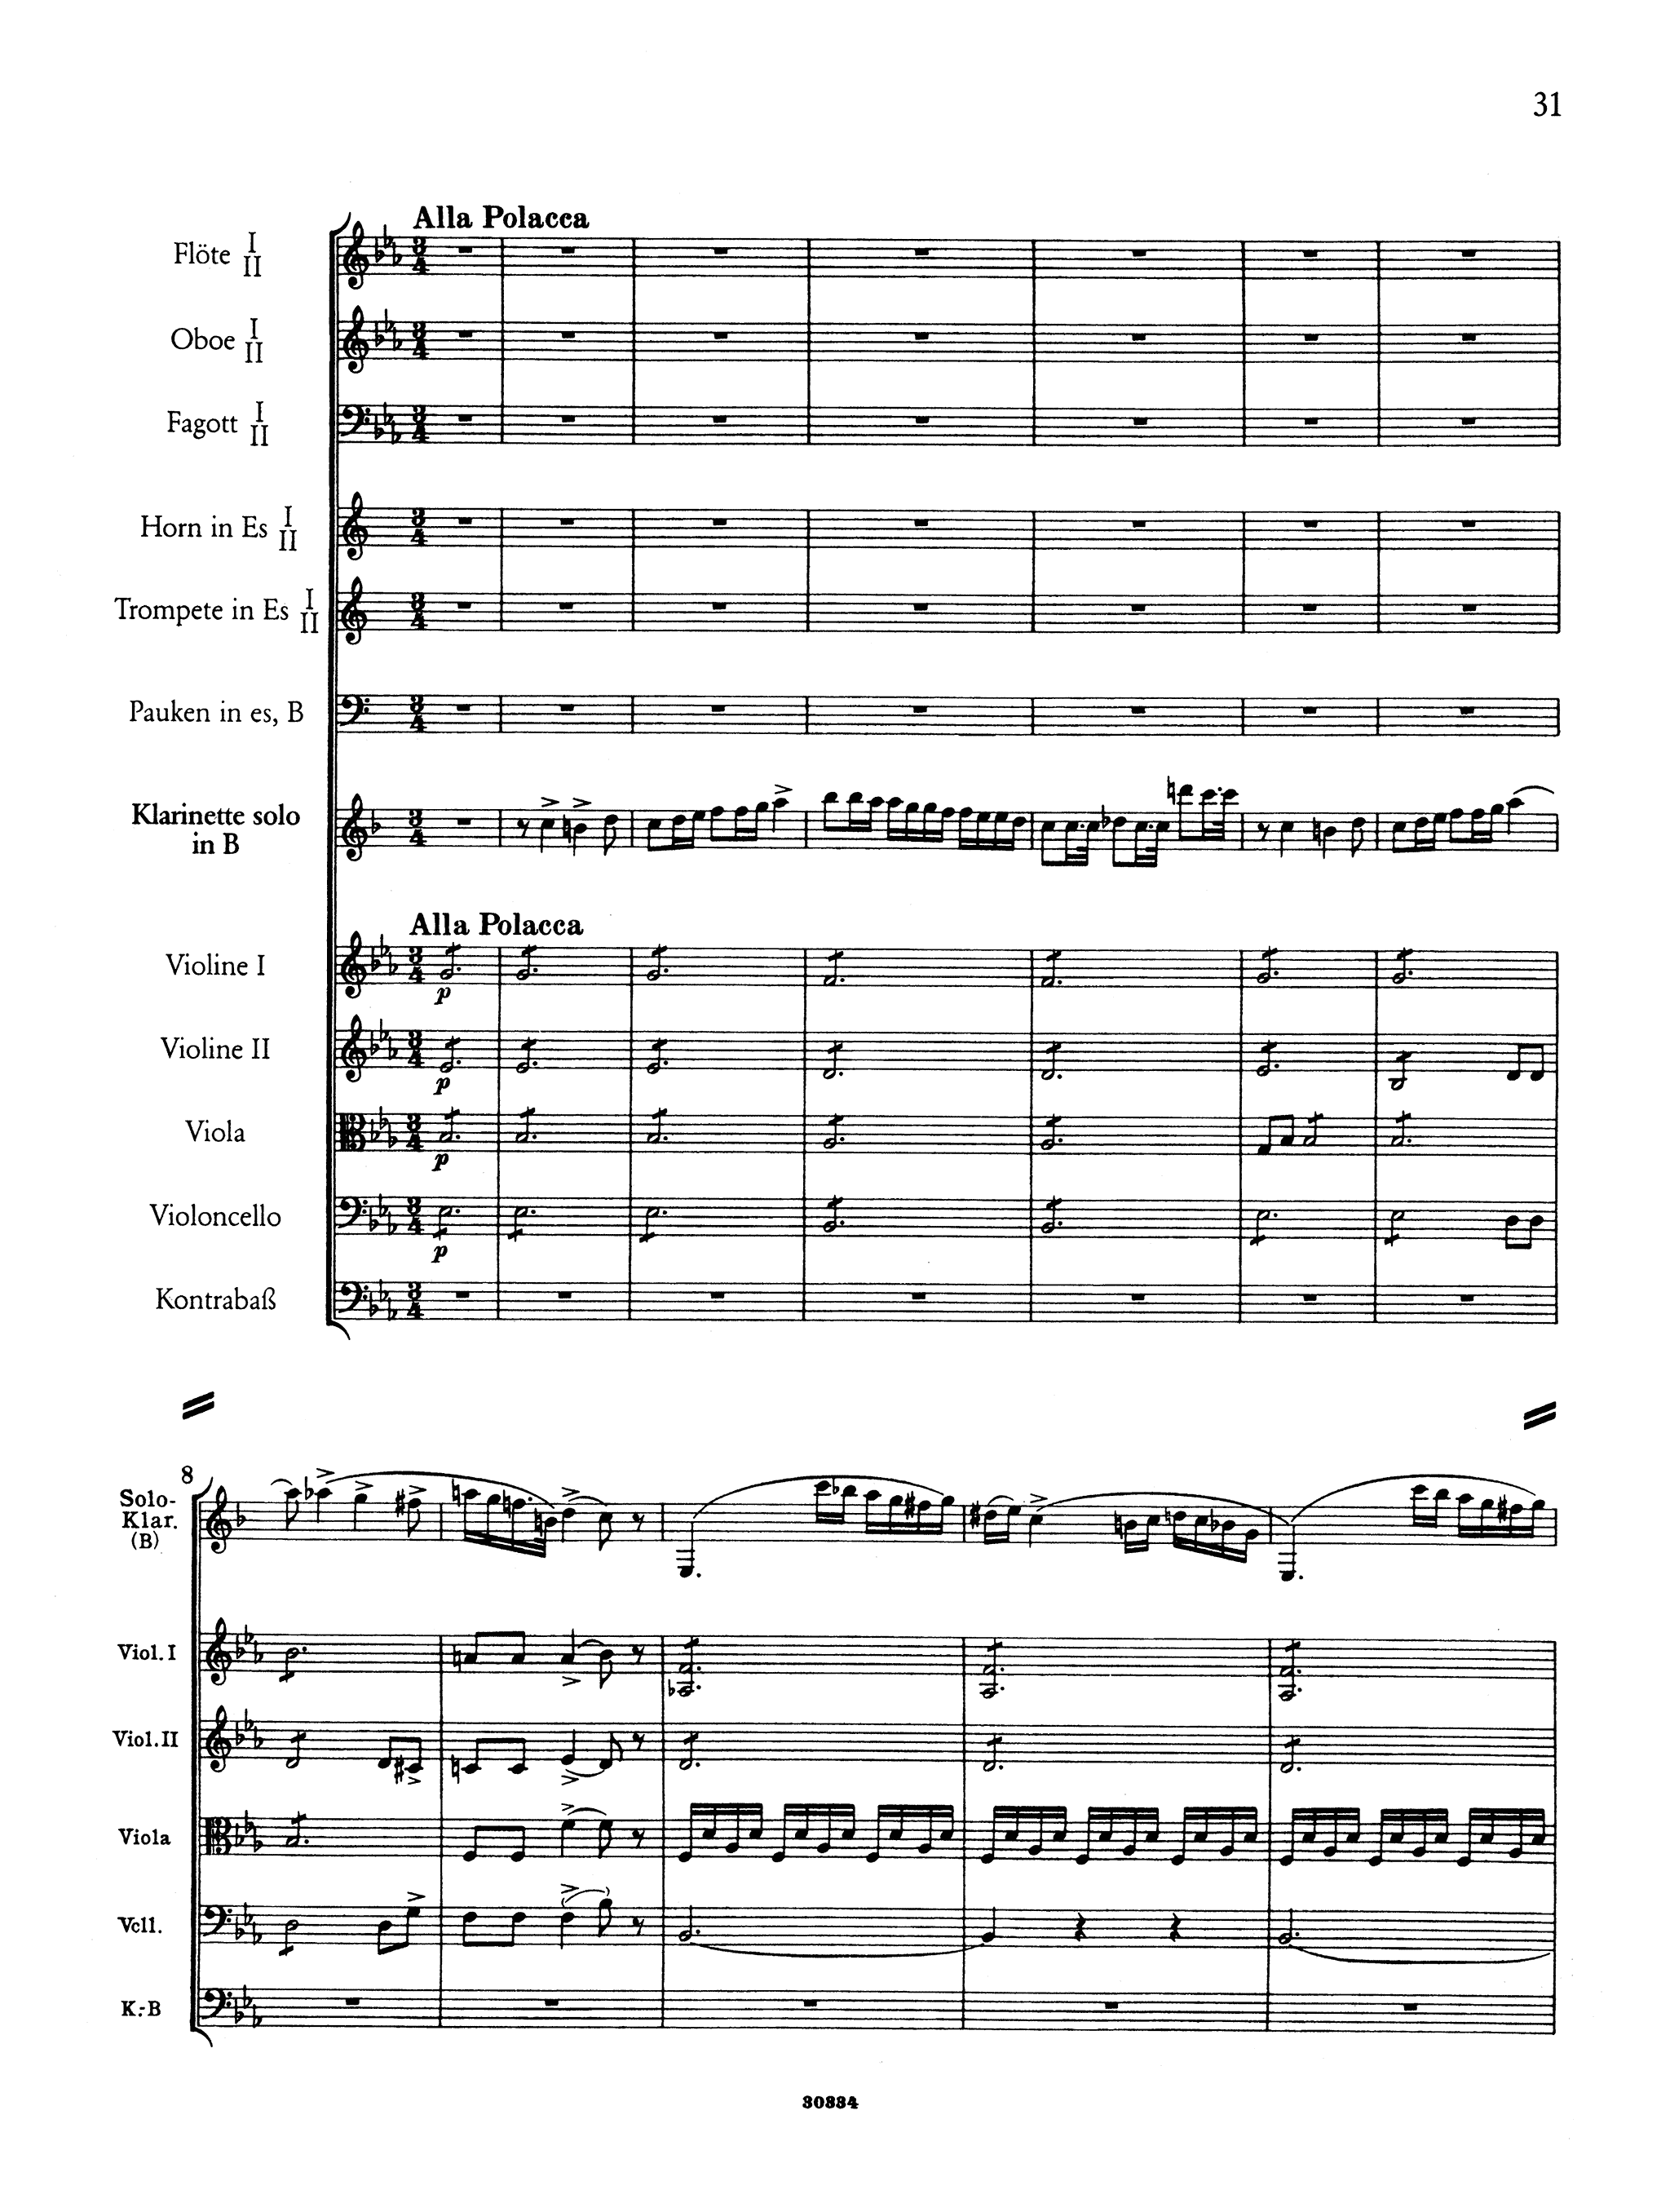 Clarinet Concerto No. 2, Op. 74 Full Score - Movement 3